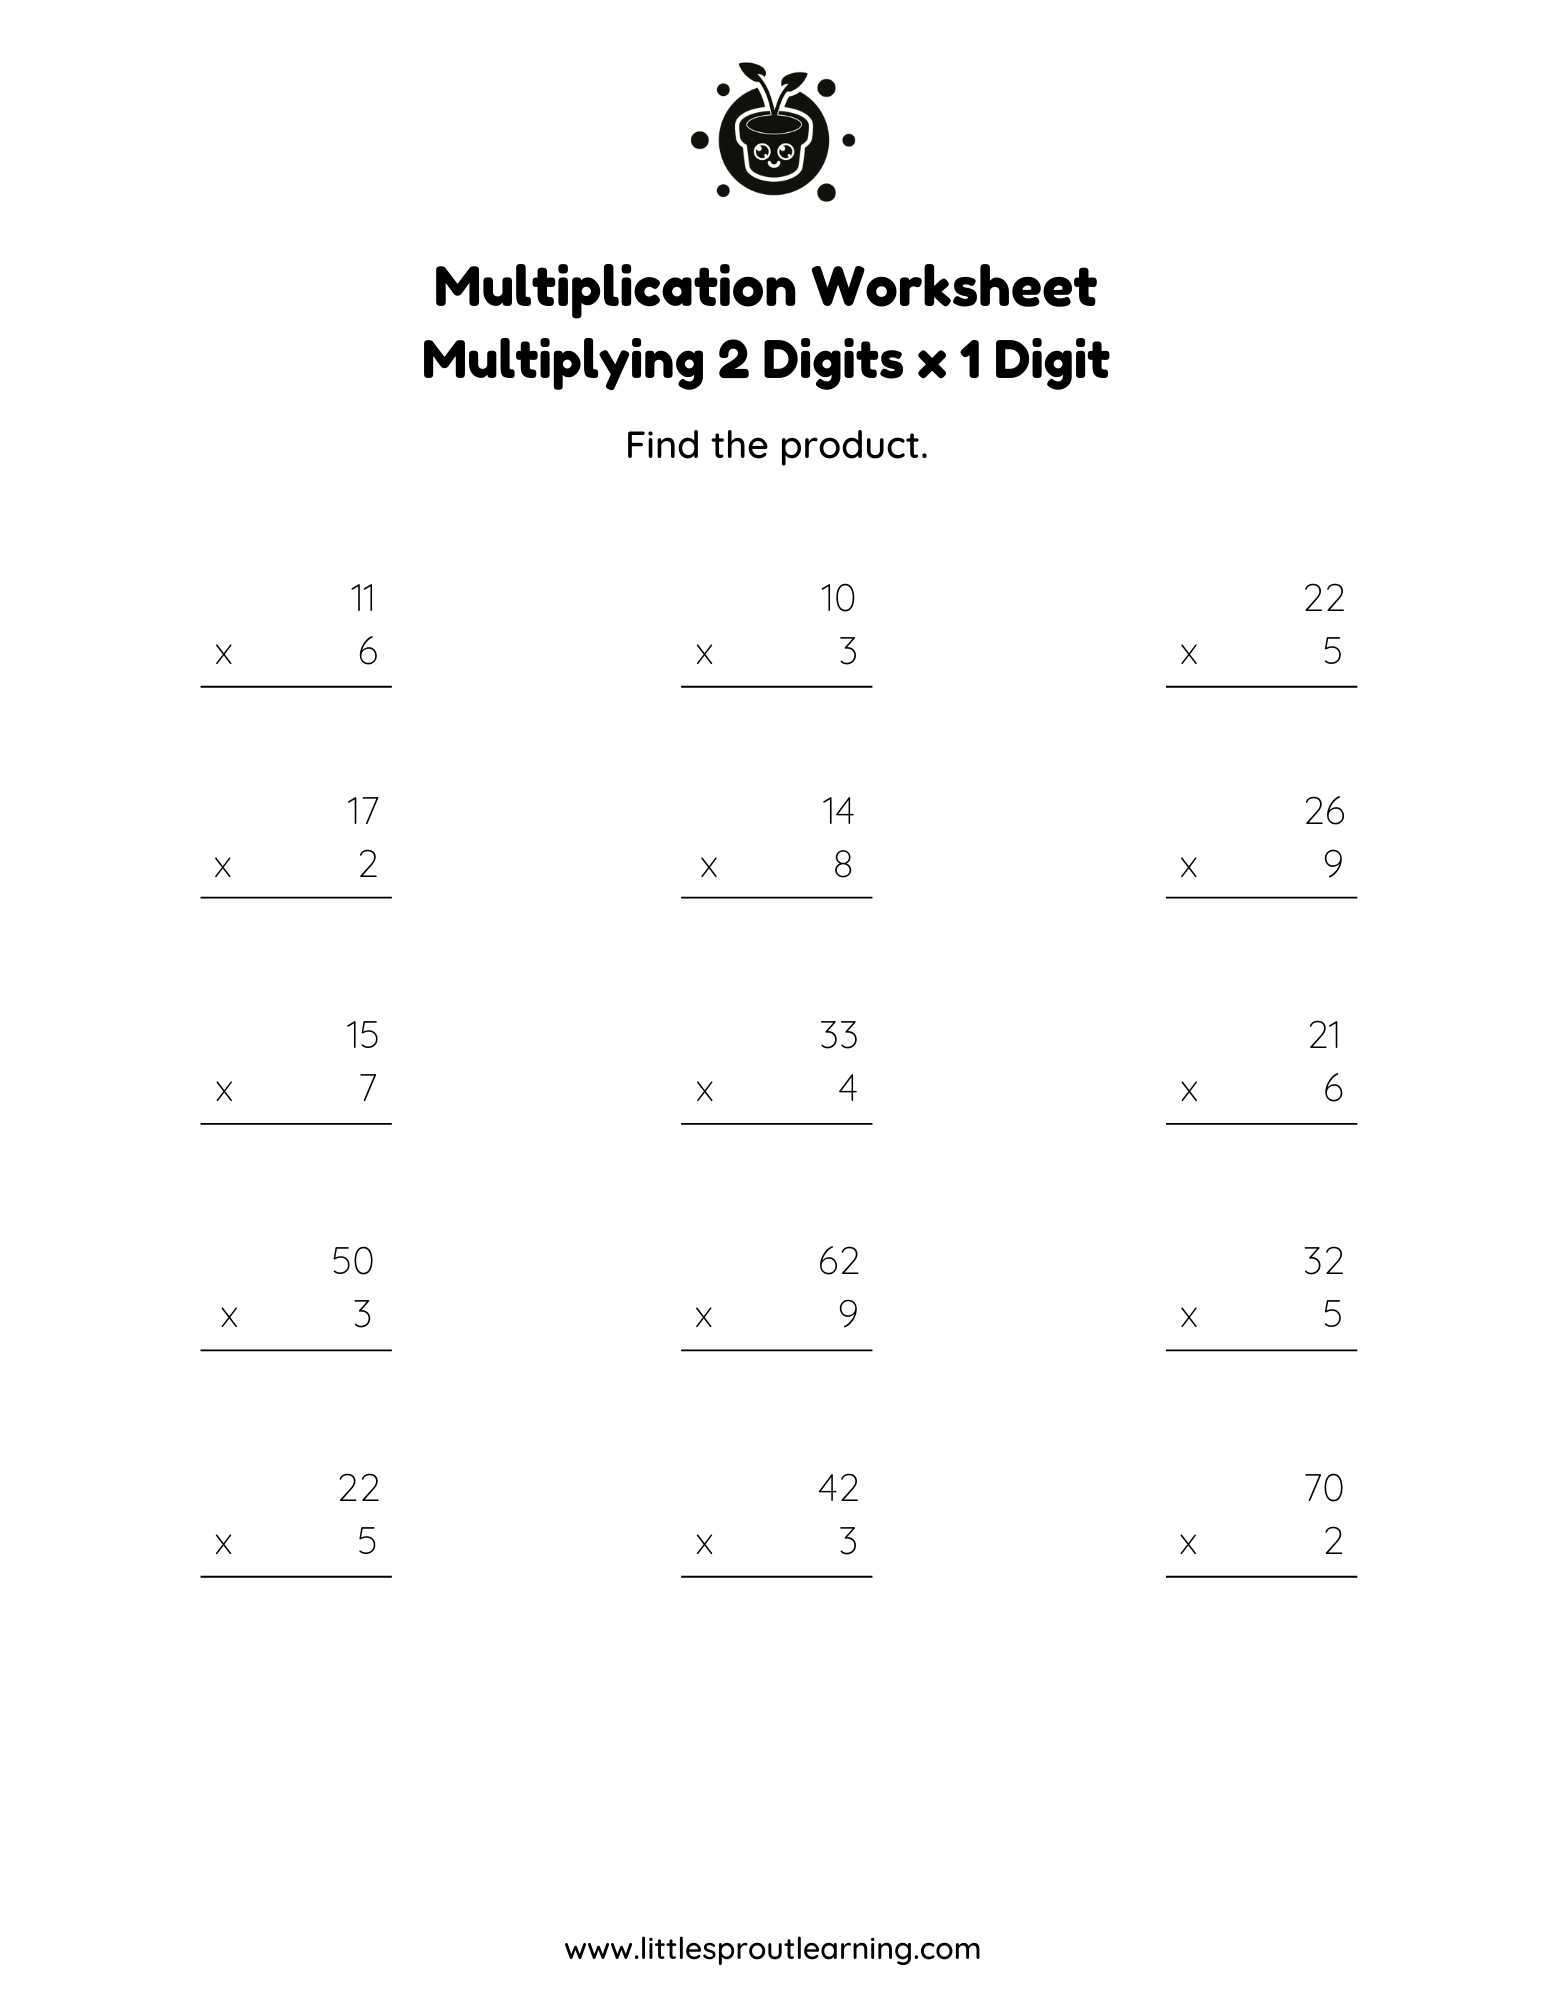 Multiplication Worksheet – Multiplying 2 Digits by Single Digits